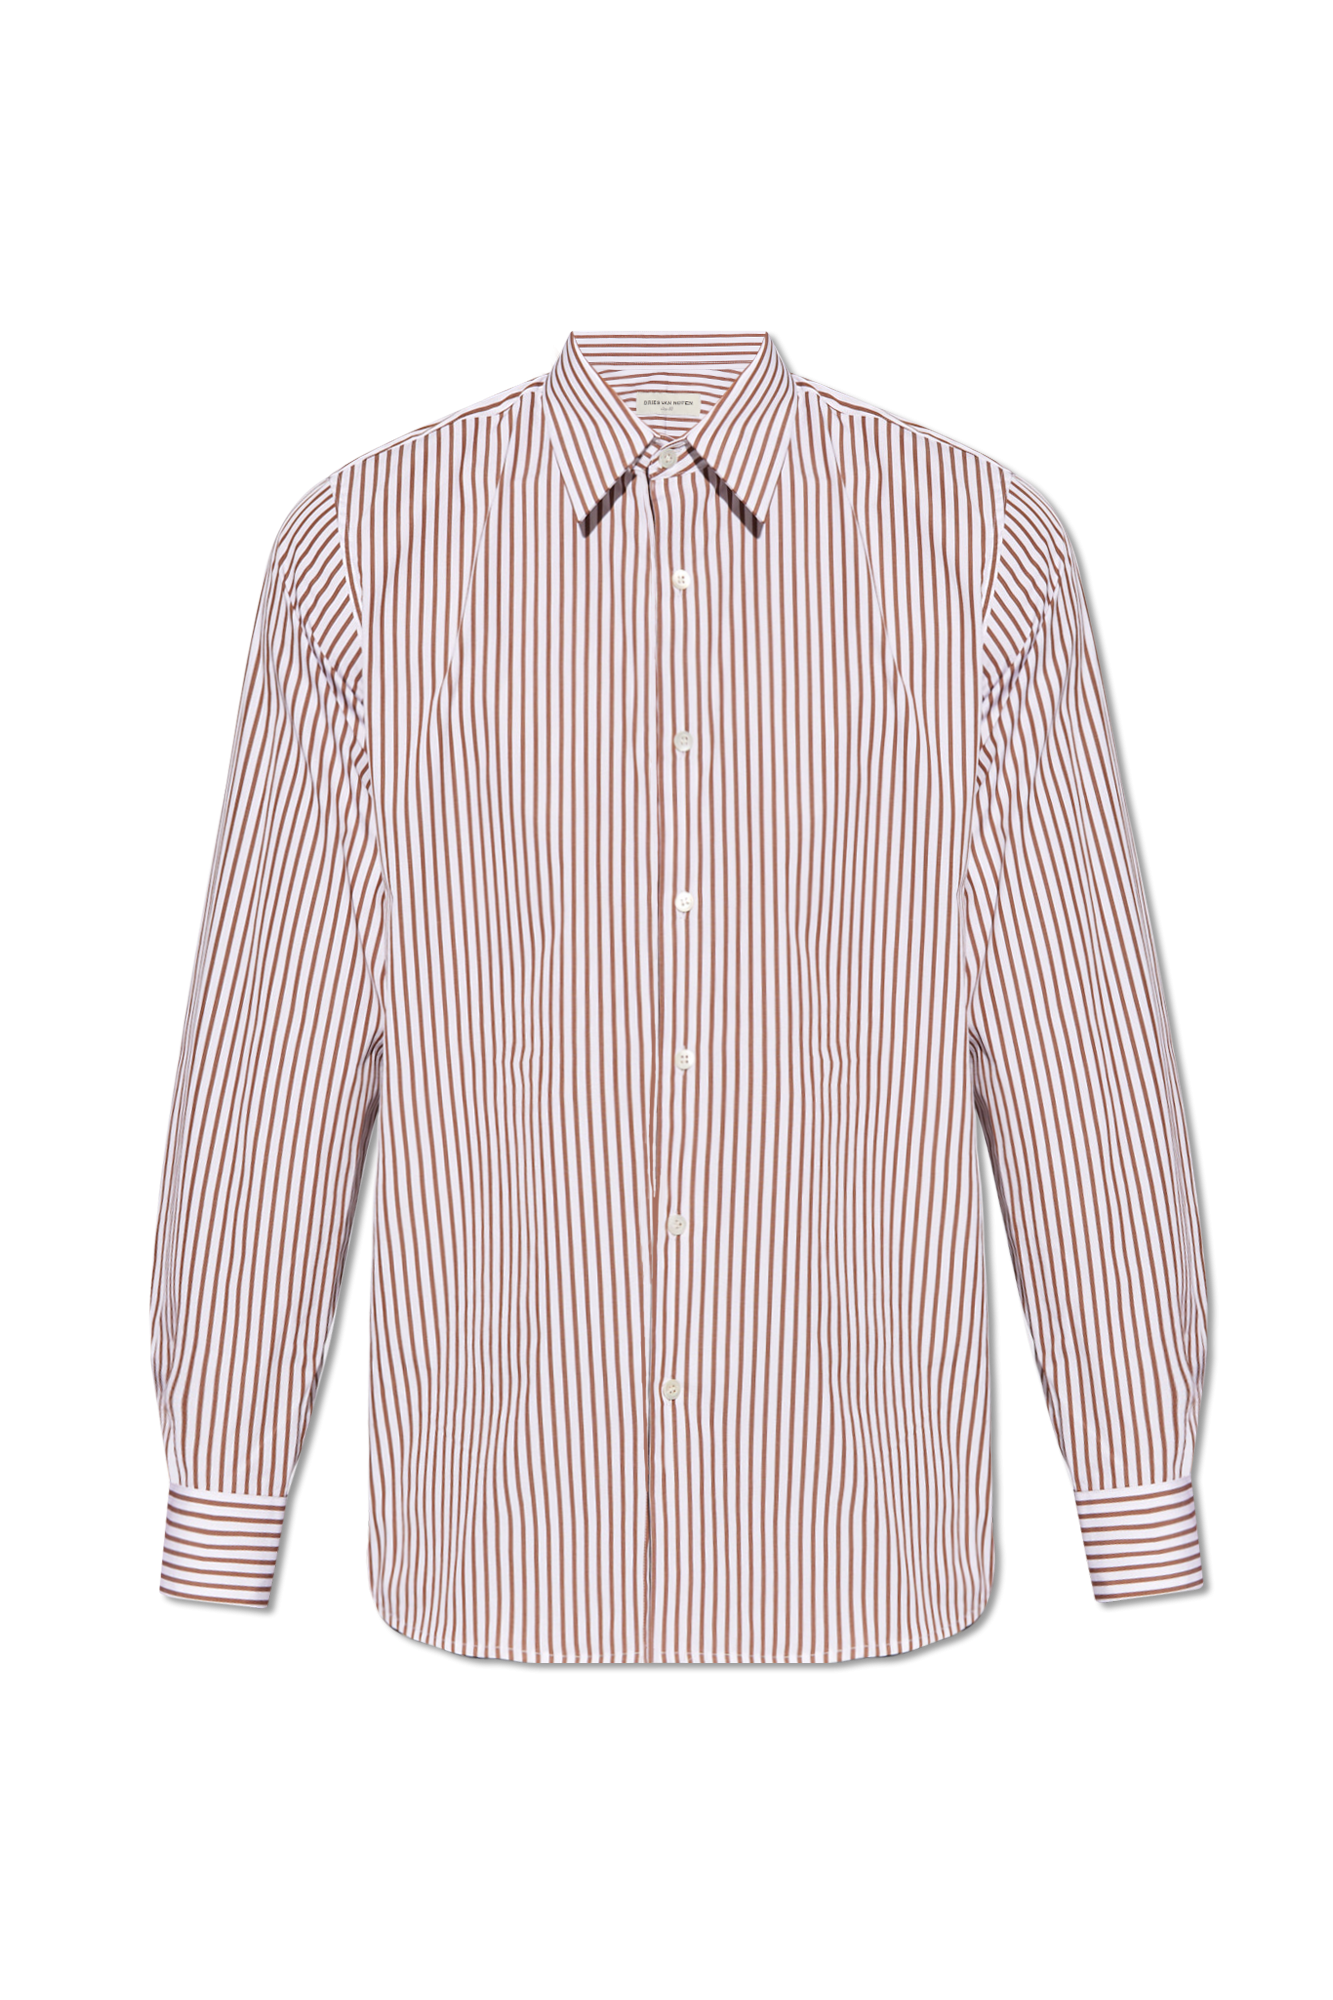 Dries Van Noten Striped printed shirt